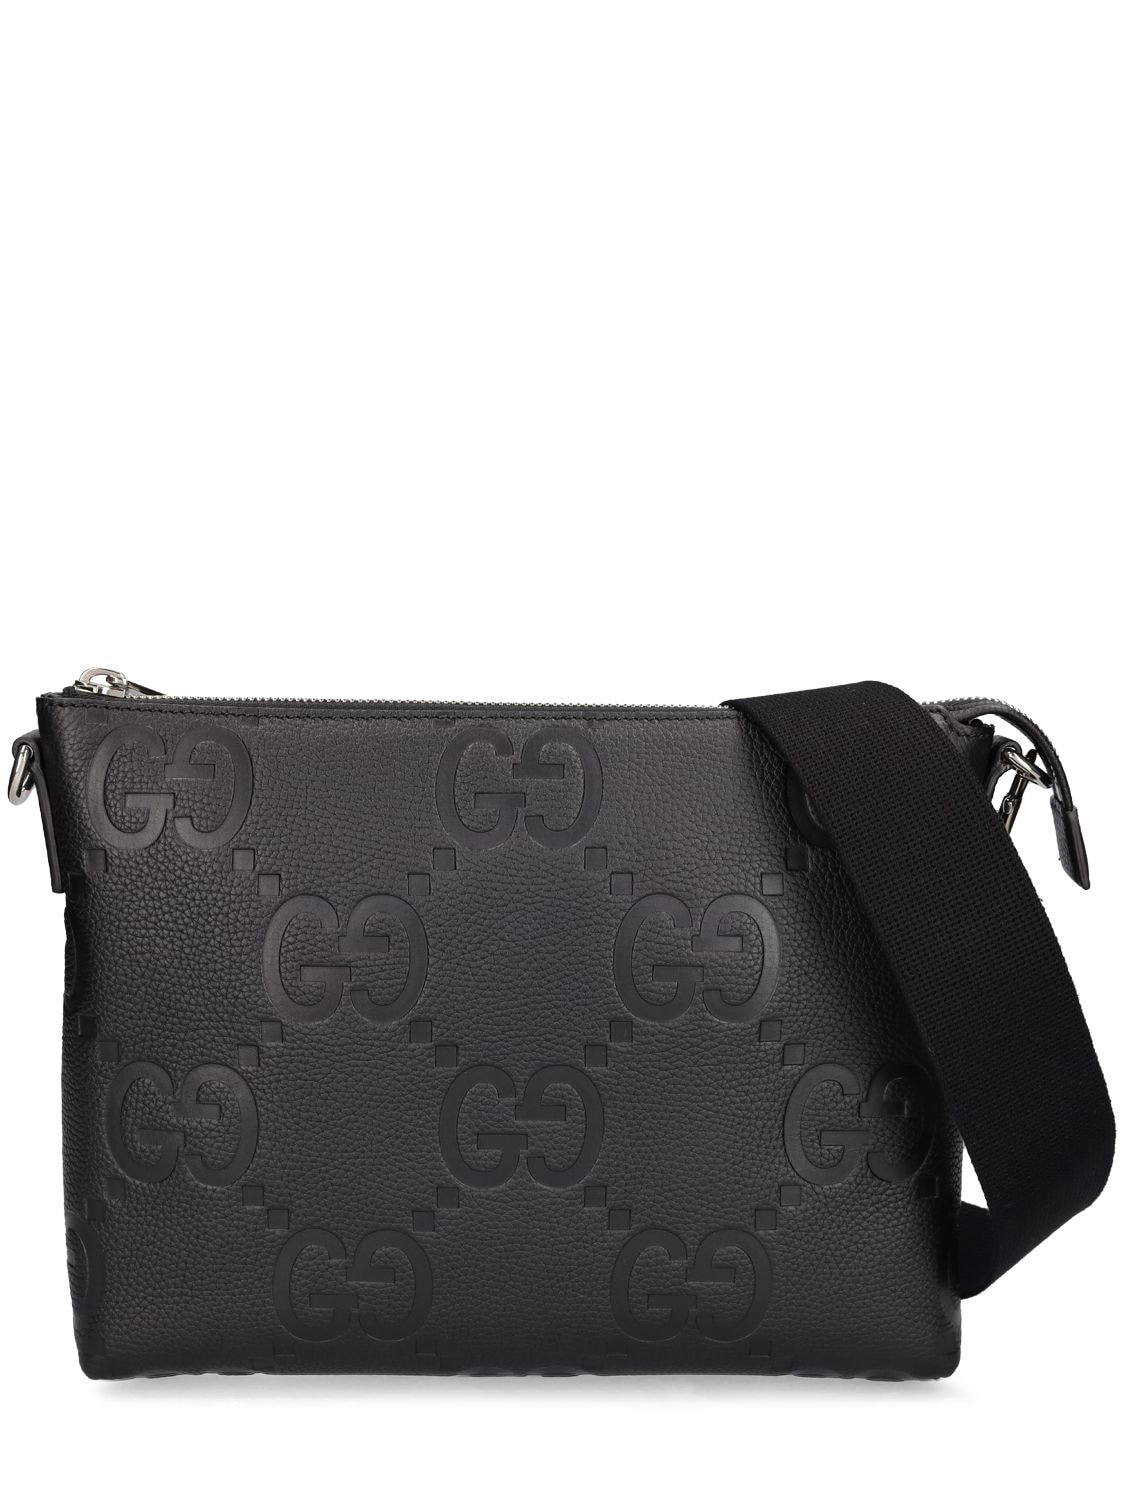 Gucci Gg Leather Crossbody Bag In Black